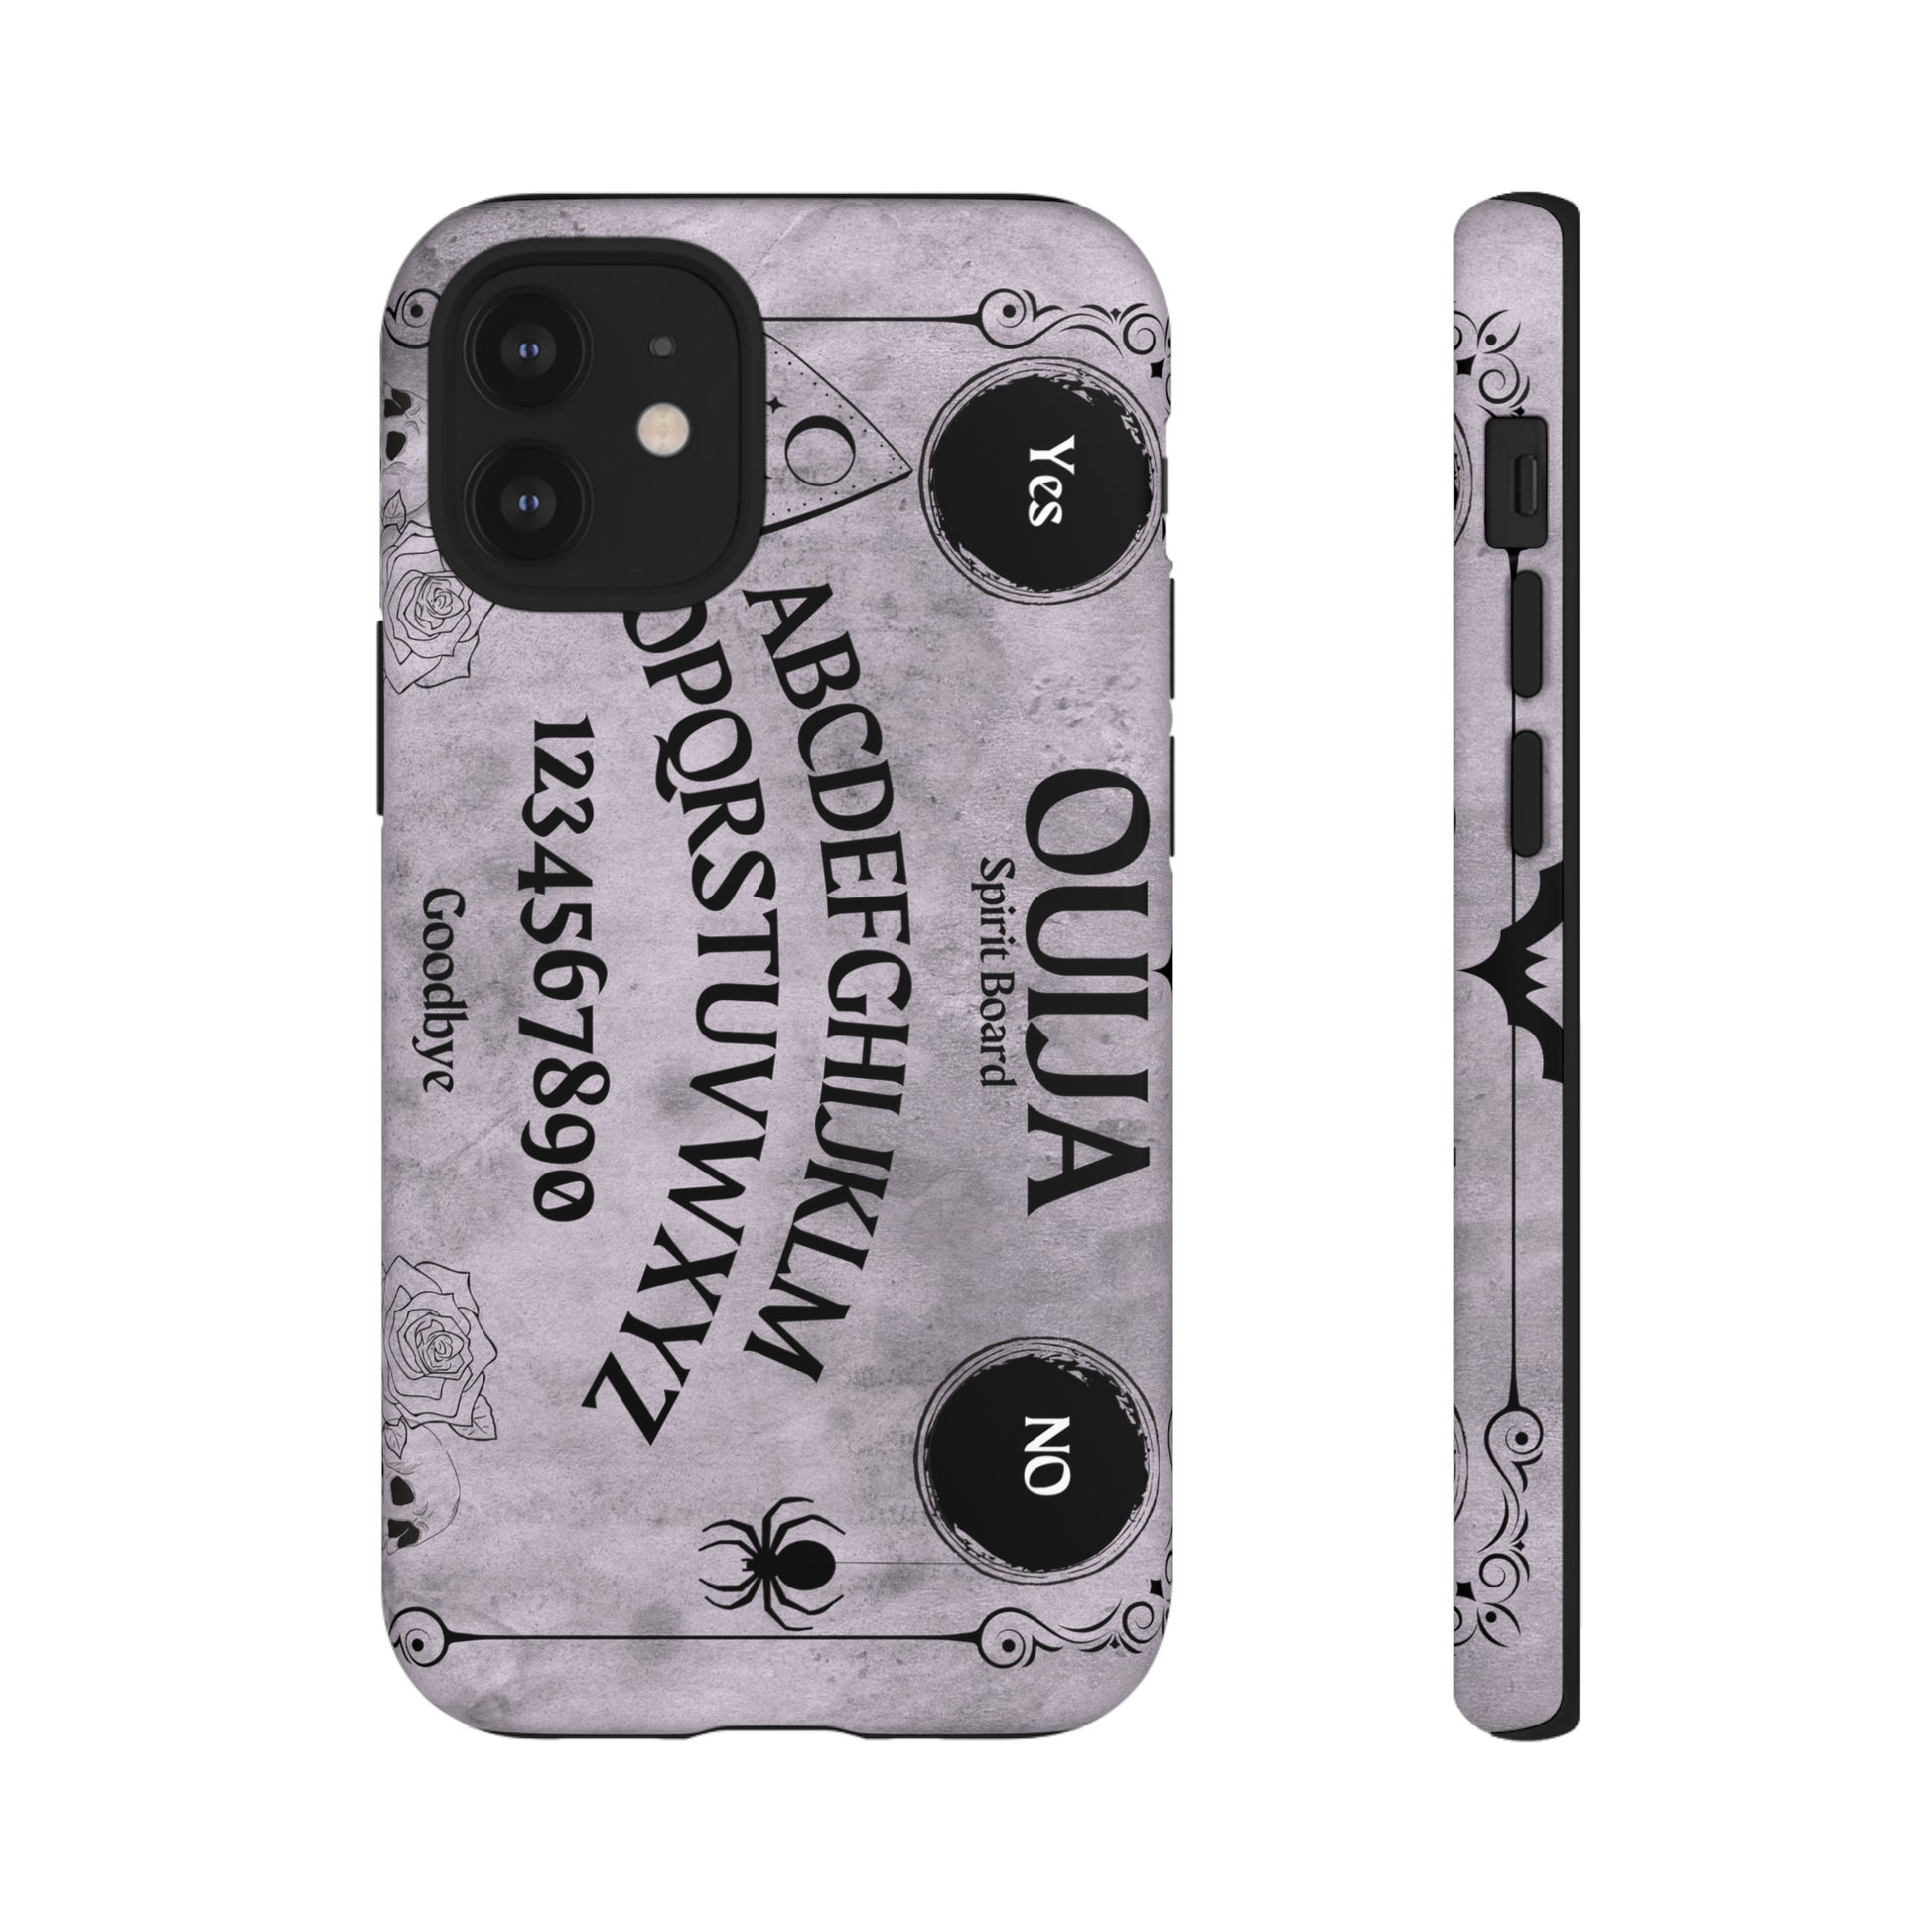 Ouija Board Tough Phone Cases For Samsung iPhone GooglePhone CaseVTZdesignsiPhone 12 MiniMatteAccessoriesGlossyhalloween